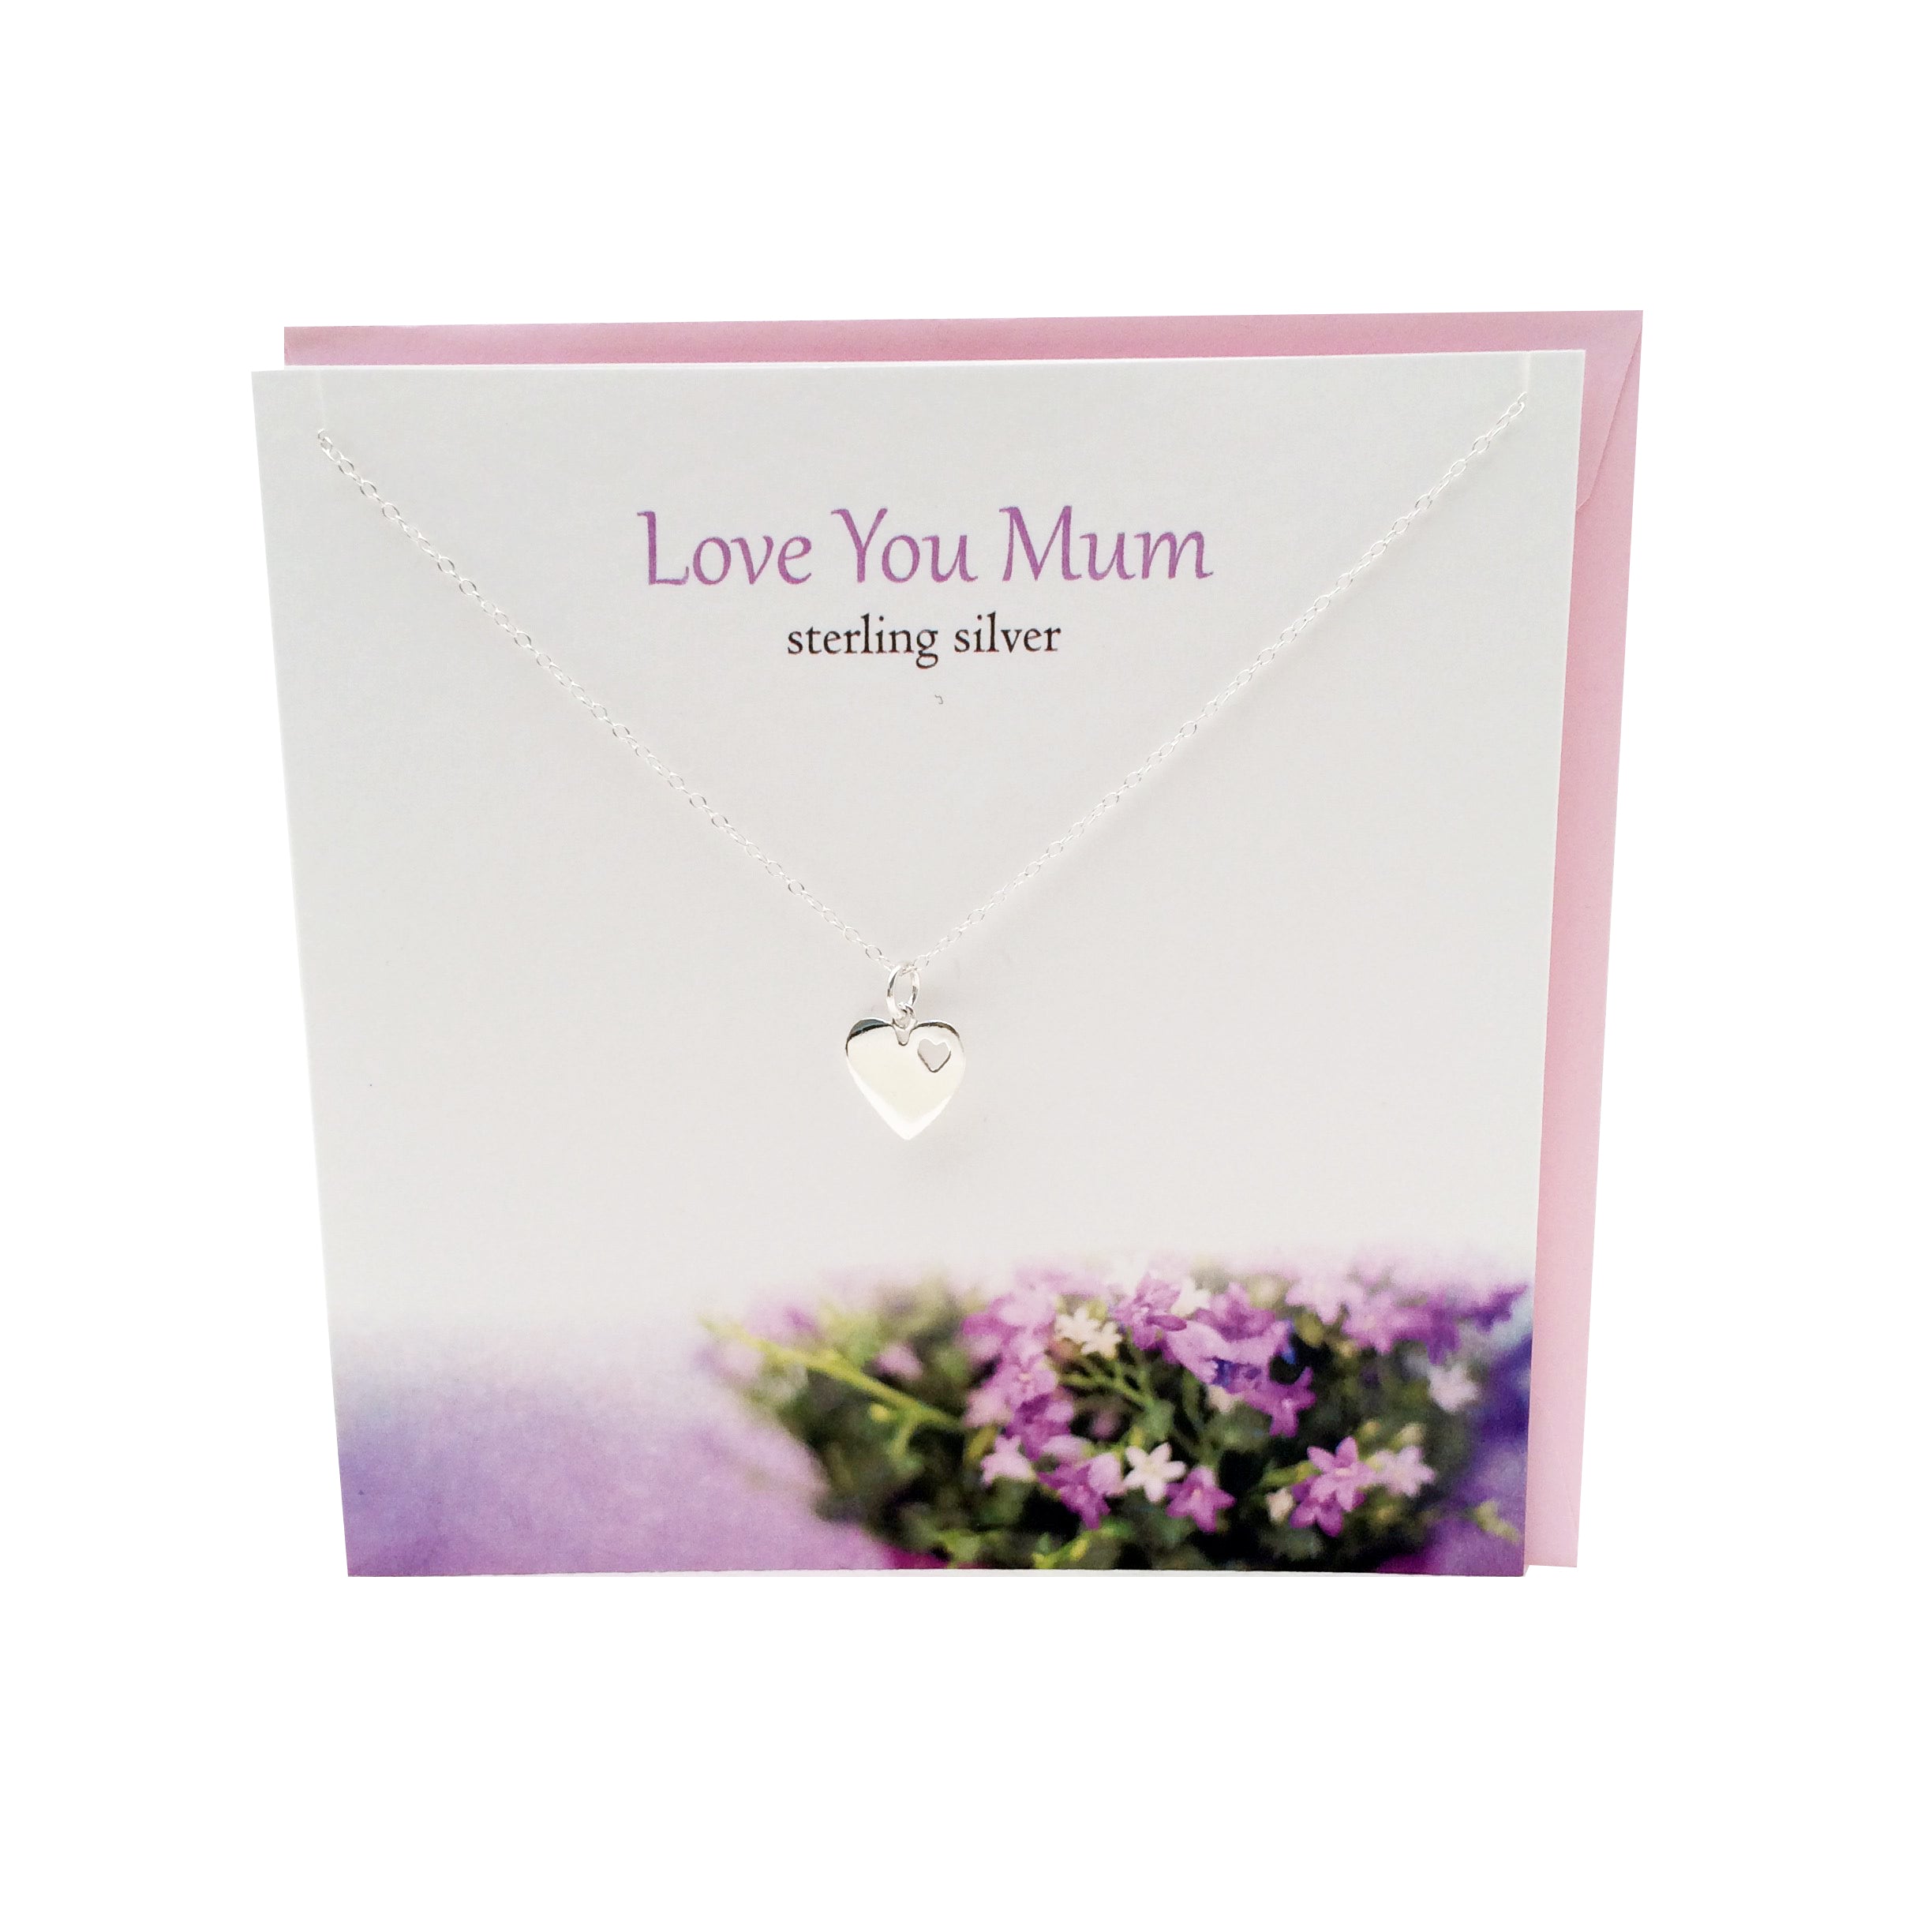 Love You Mum silver heart necklace | The Silver Studio Scotland